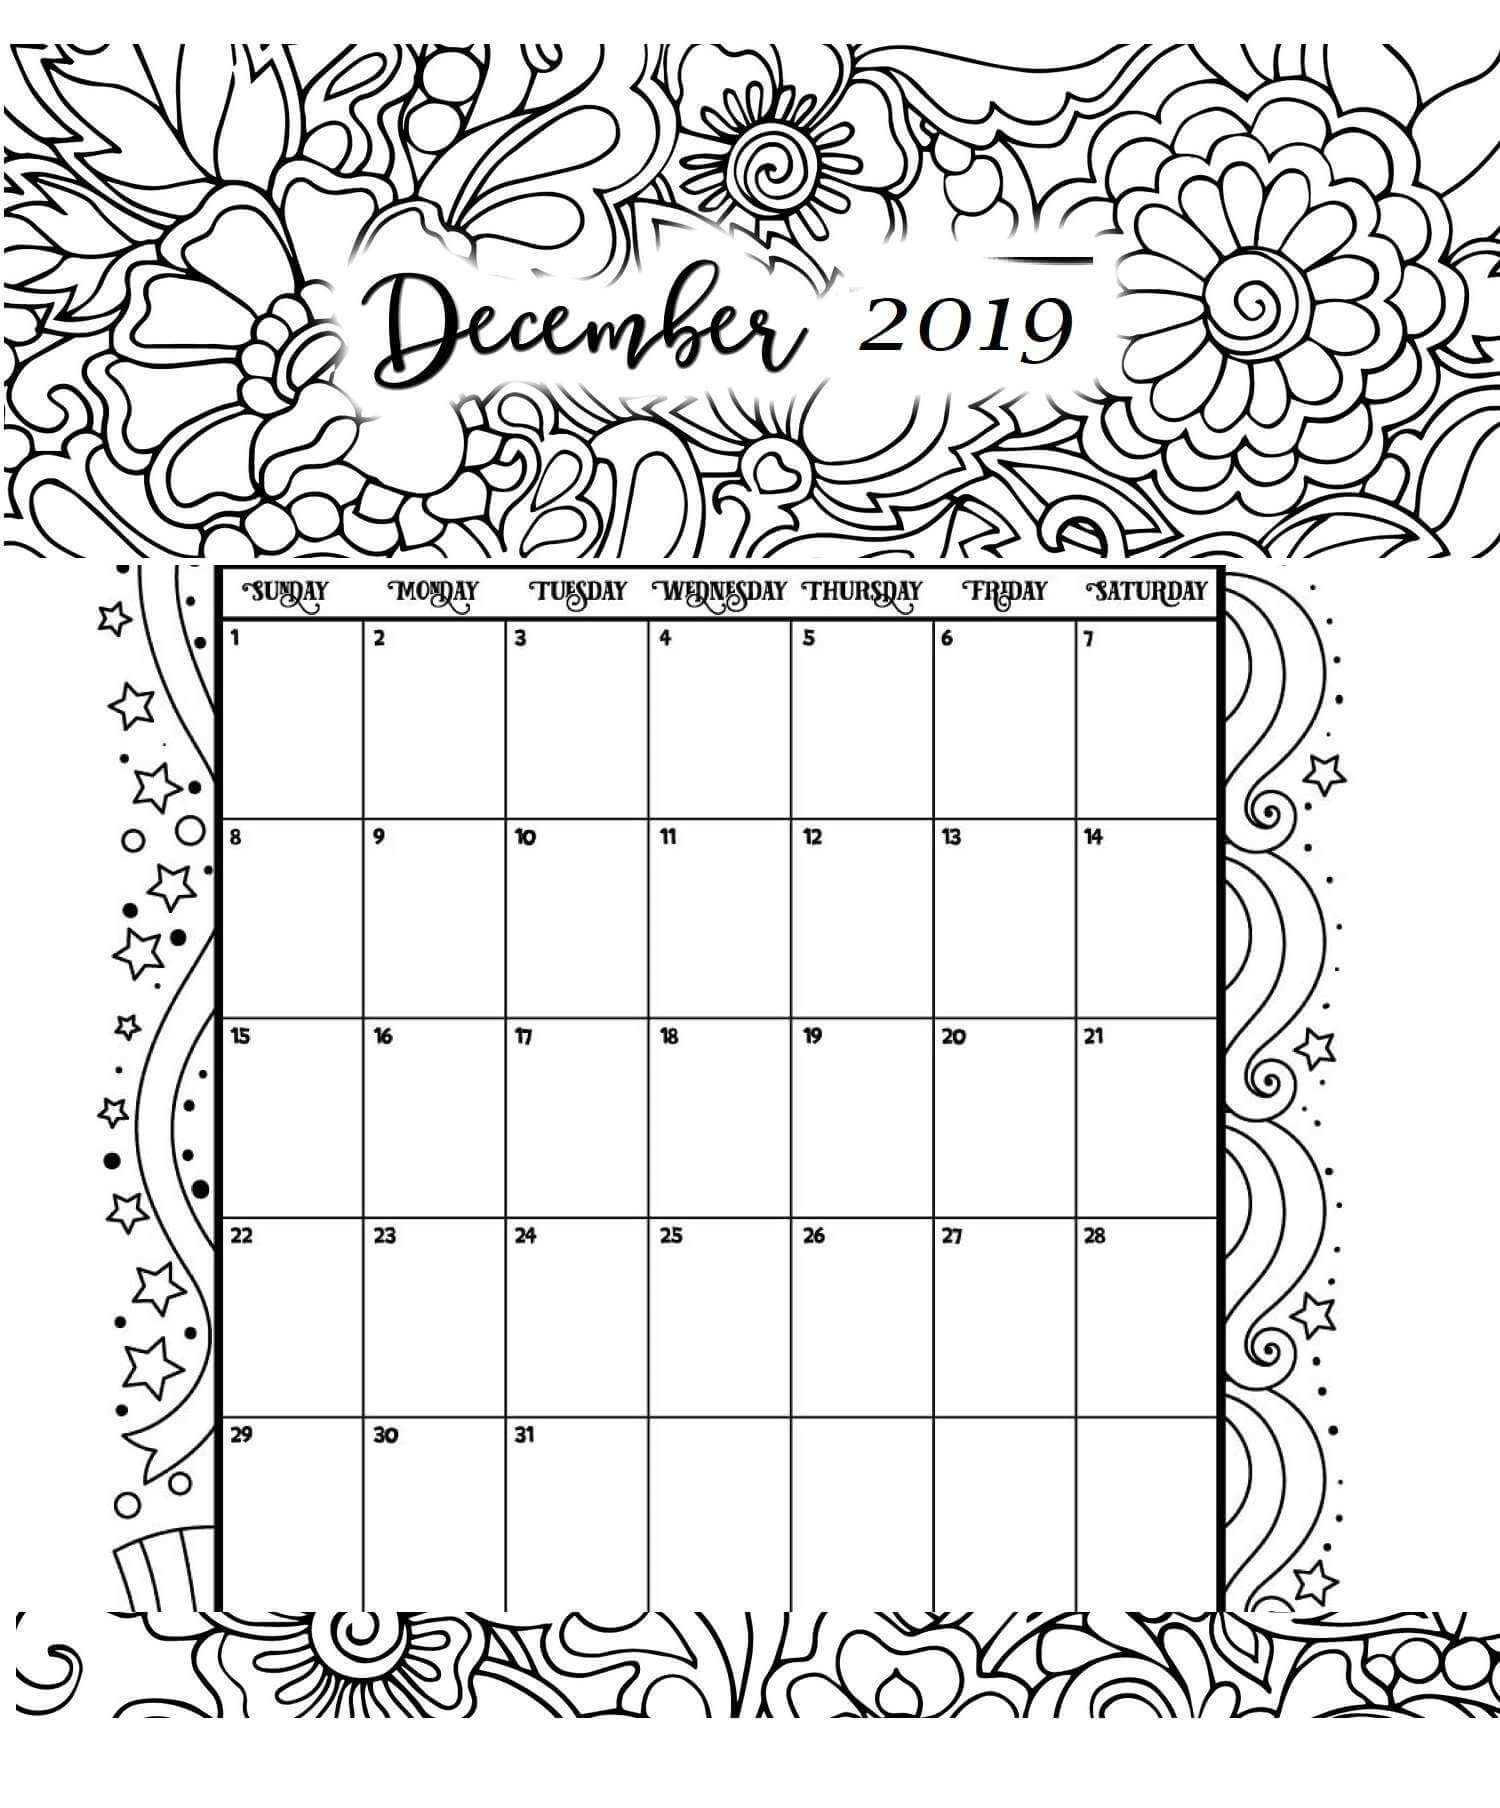 December Calendar 2019